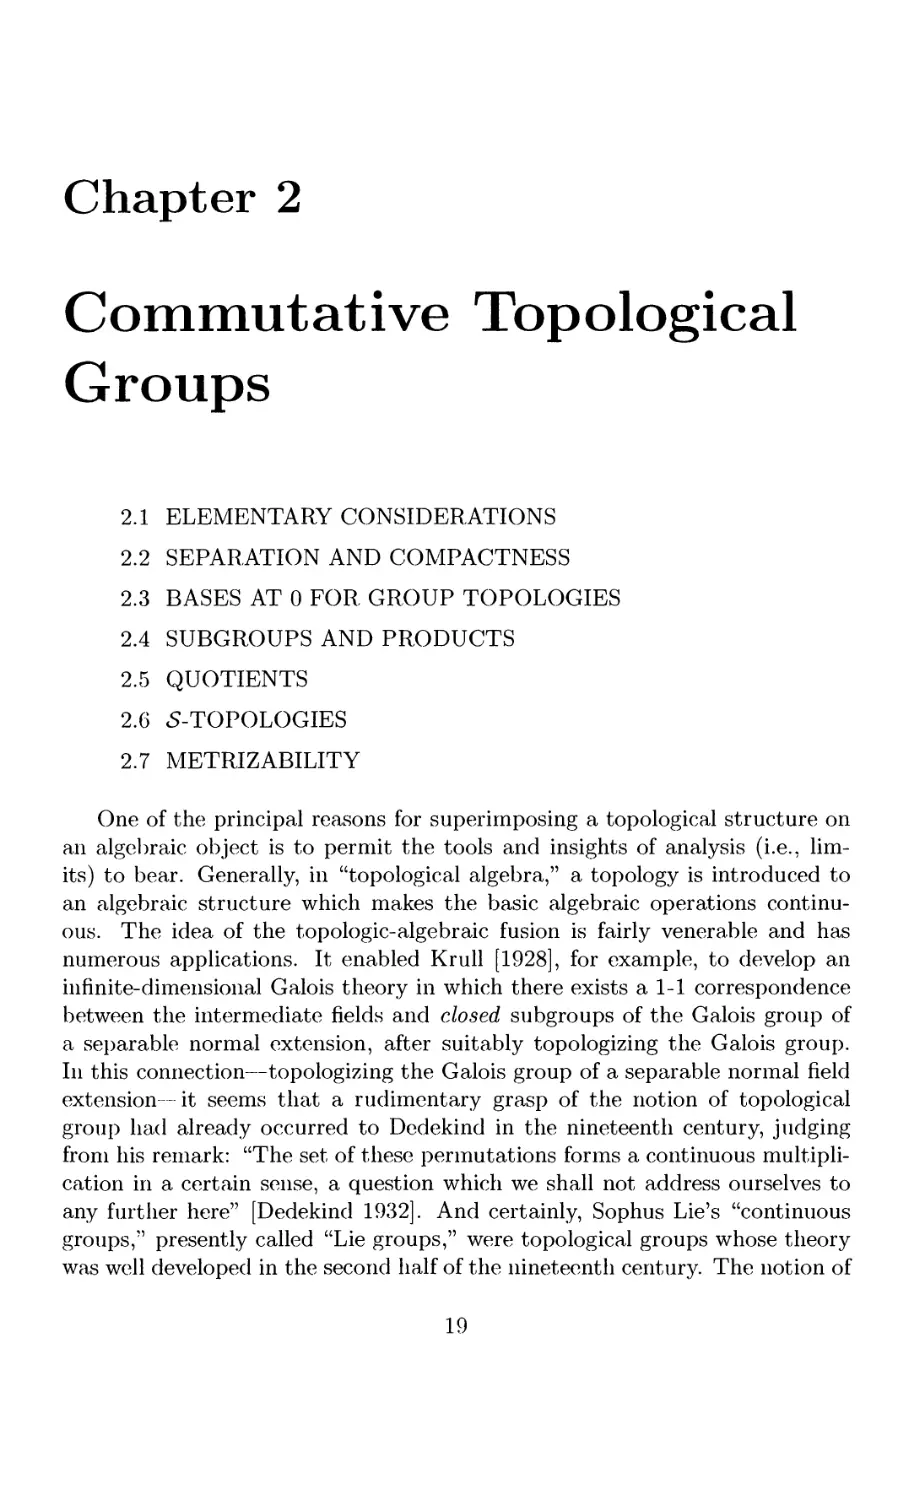 2 Commutative Topological Groups